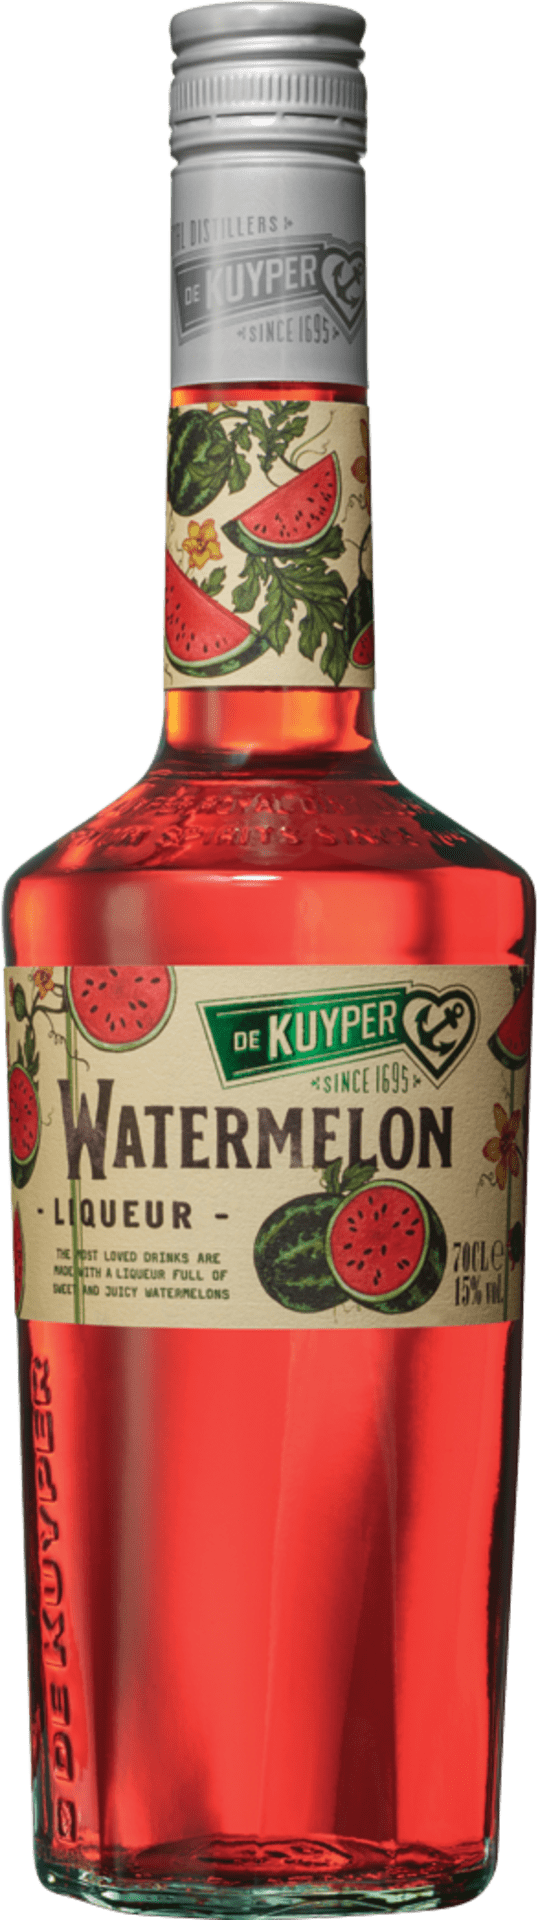 Watermelon Liqueur